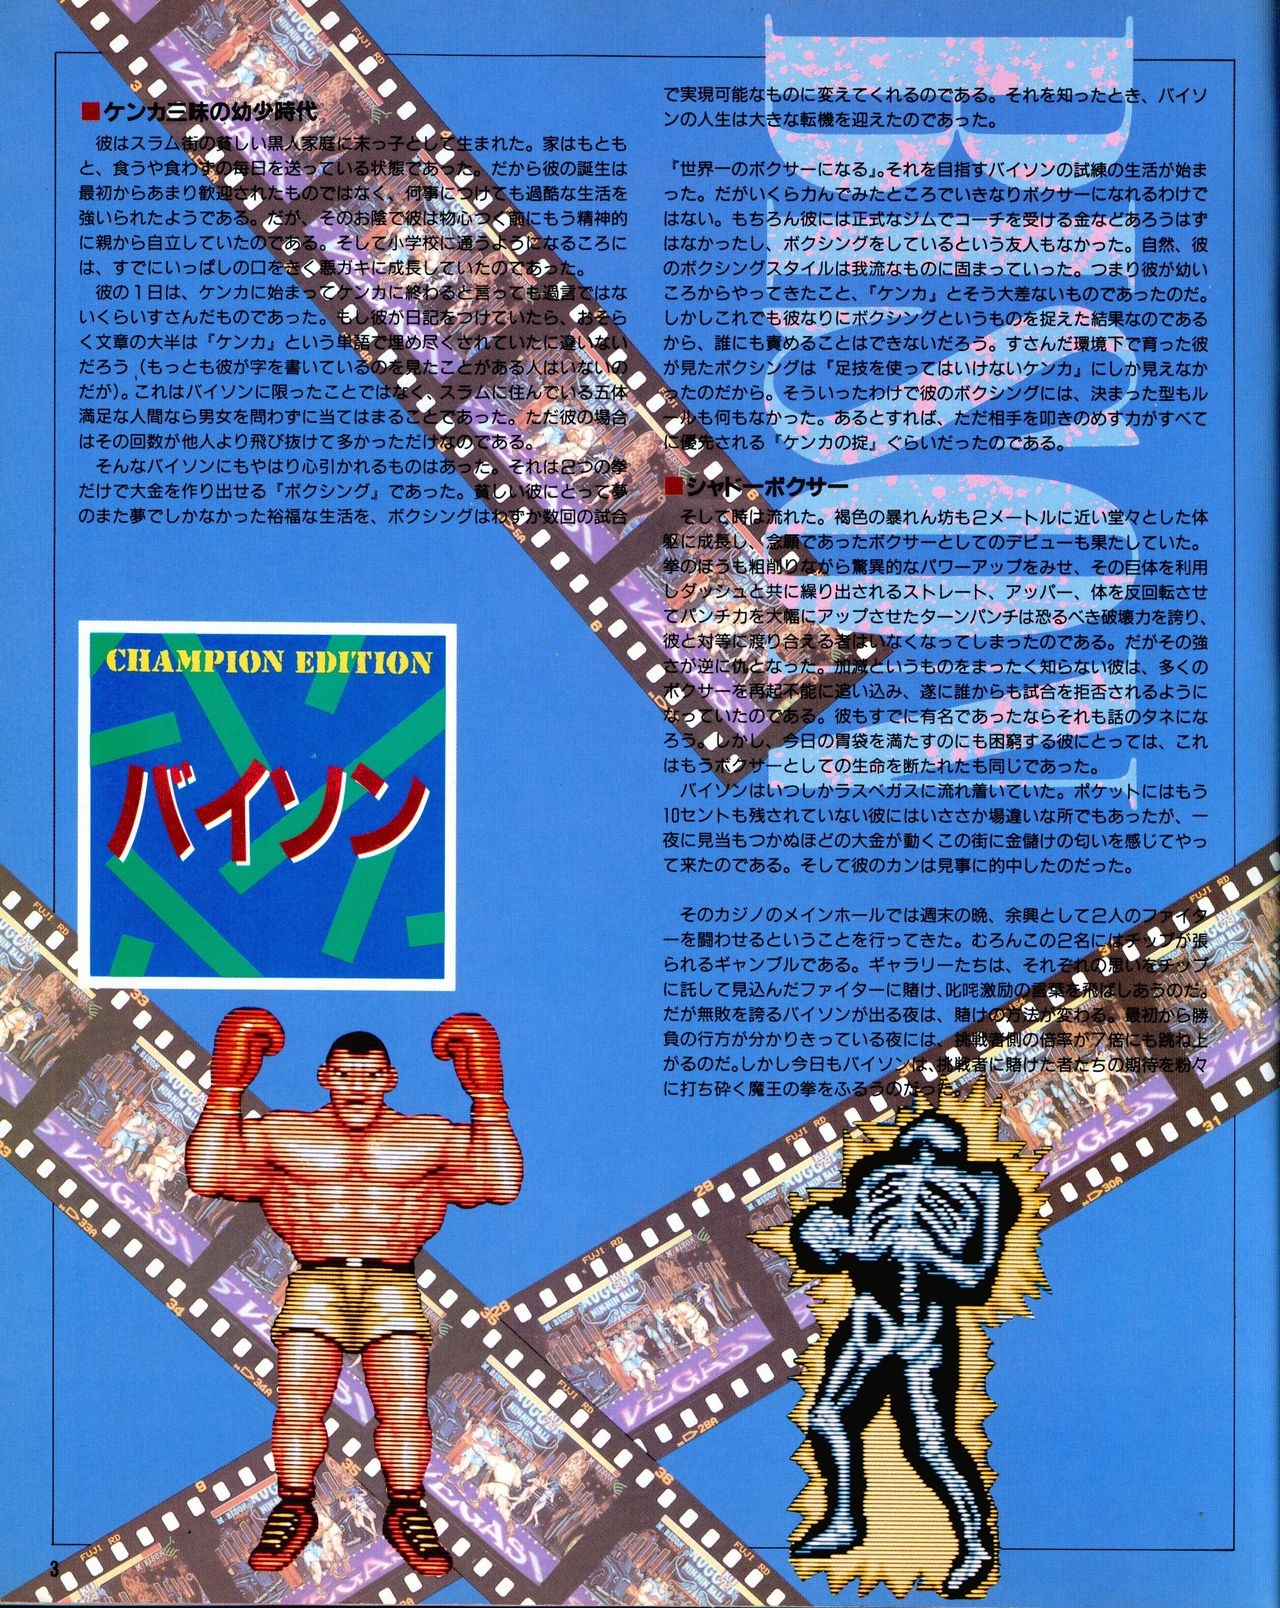 Street Fighter II Dash - Gamest special issue 77 4